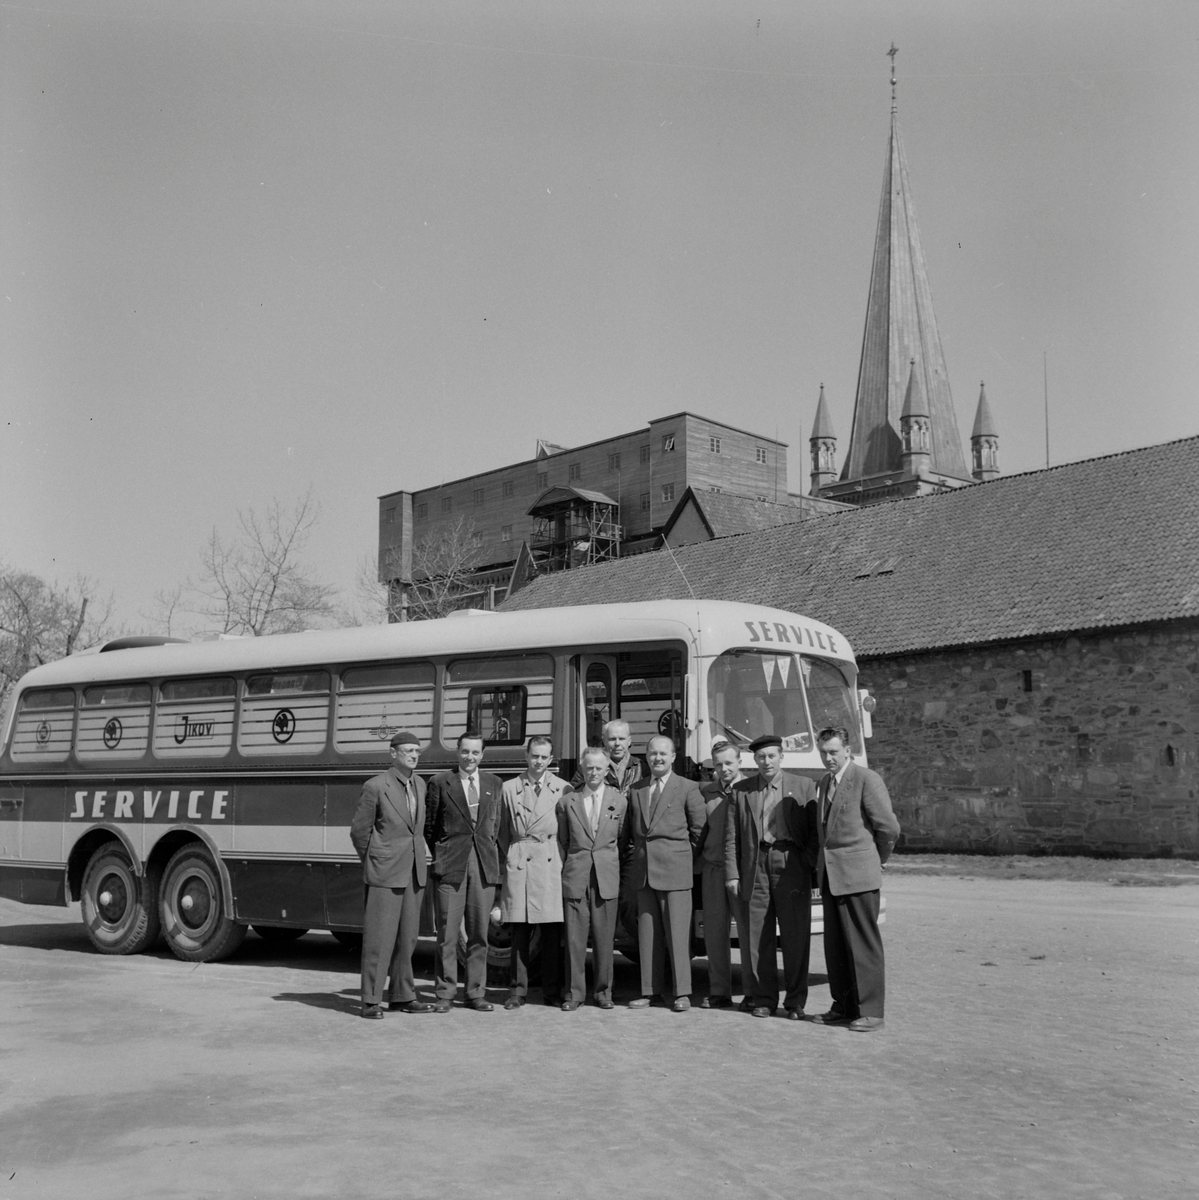 Skoda servicebuss